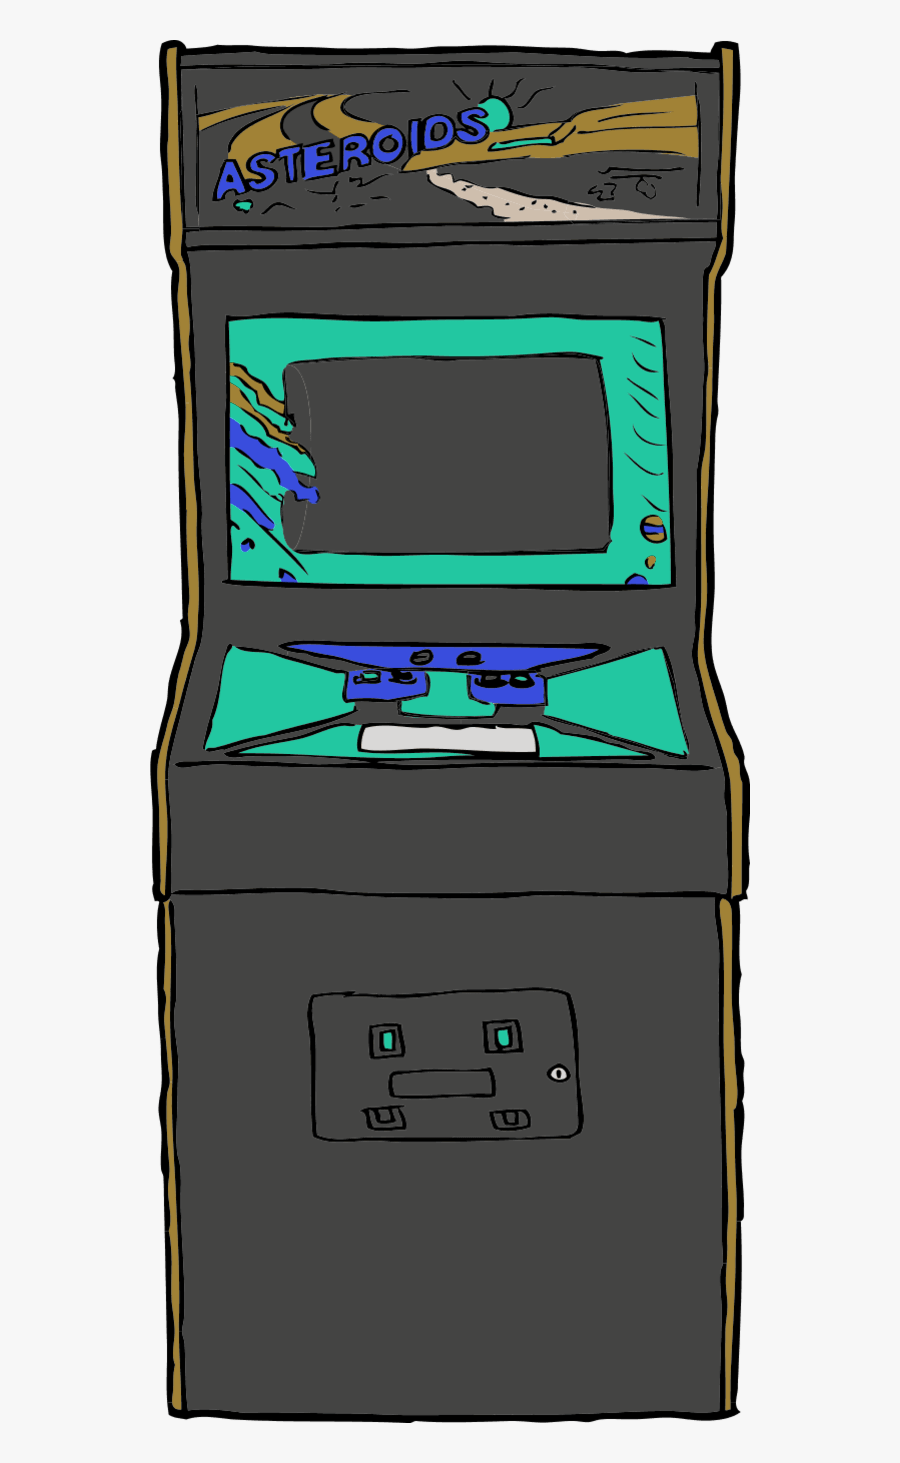 Asteroids Arcade Game - Arcade Game Art Transparent, Transparent Clipart